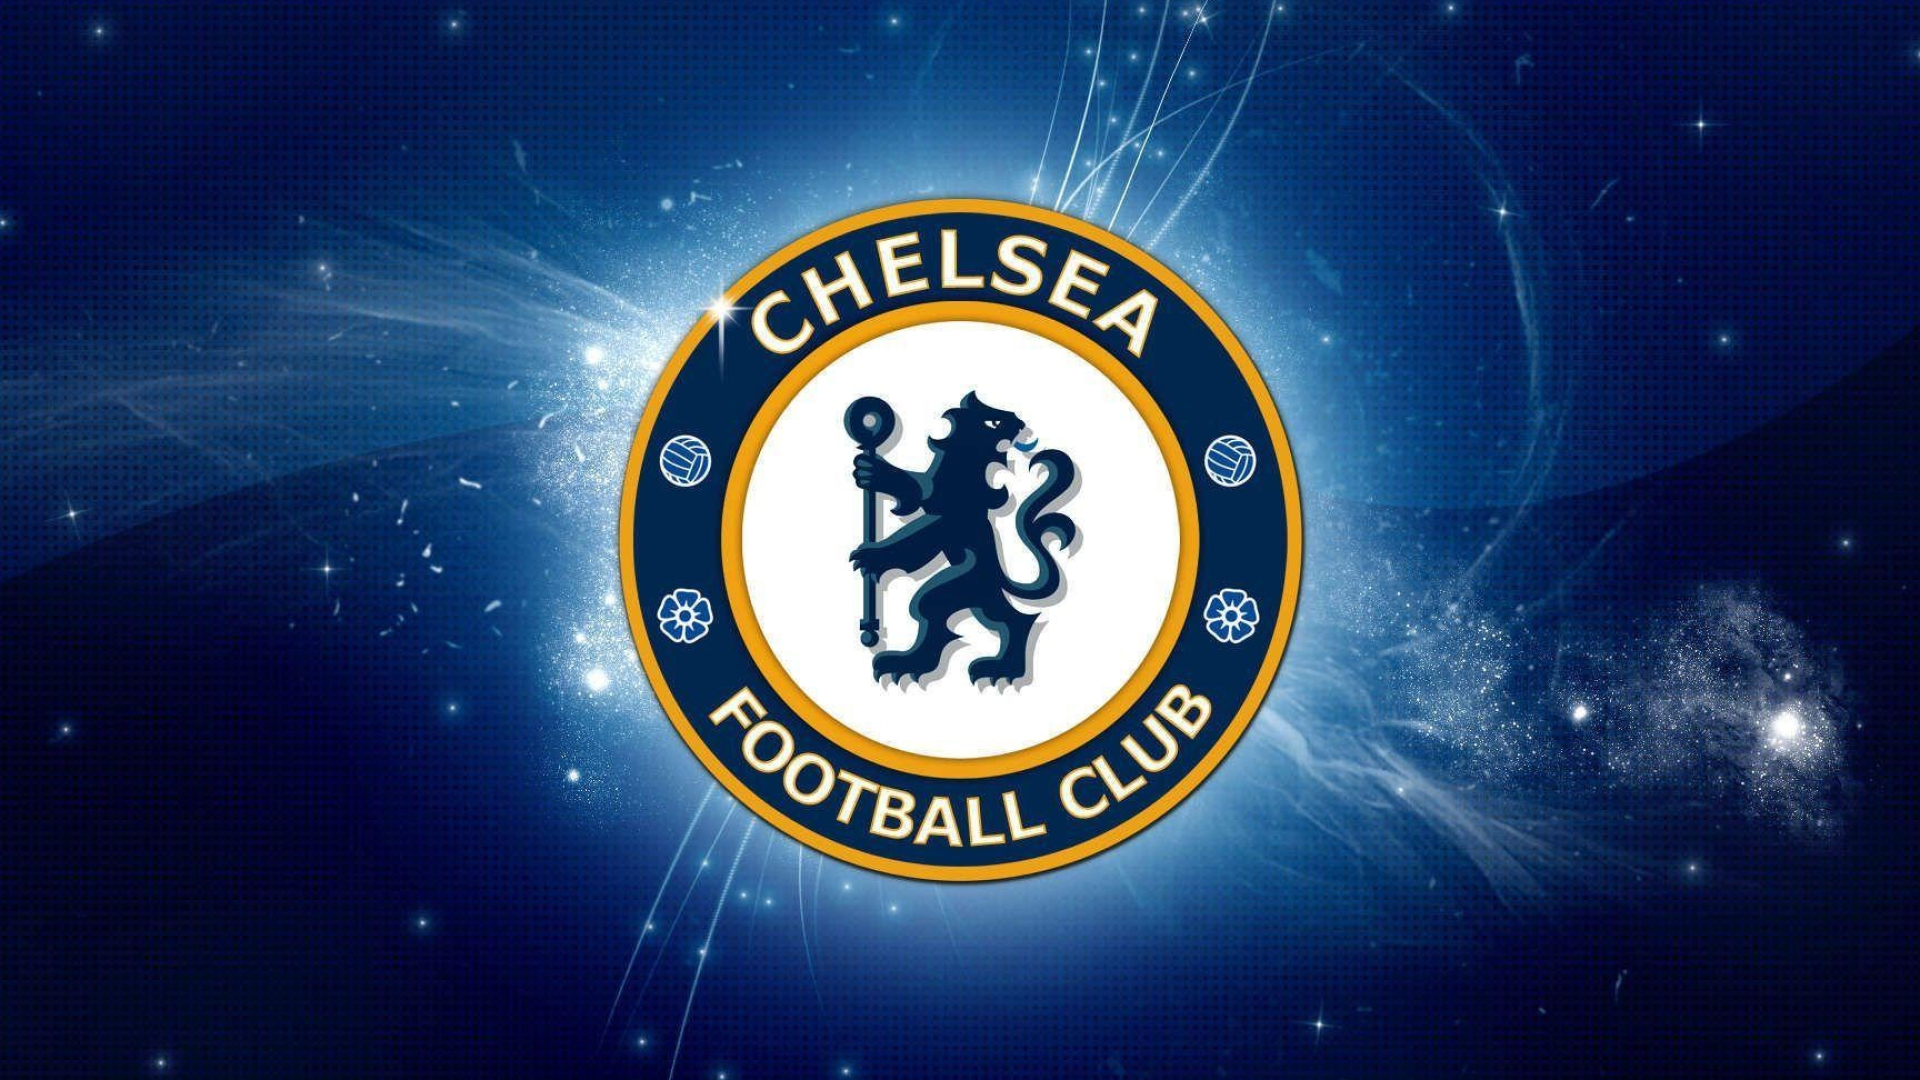 Chelsea: FC, based at the iconic 41,000-capacity Stamford Bridge stadium. 1920x1080 Full HD Wallpaper.